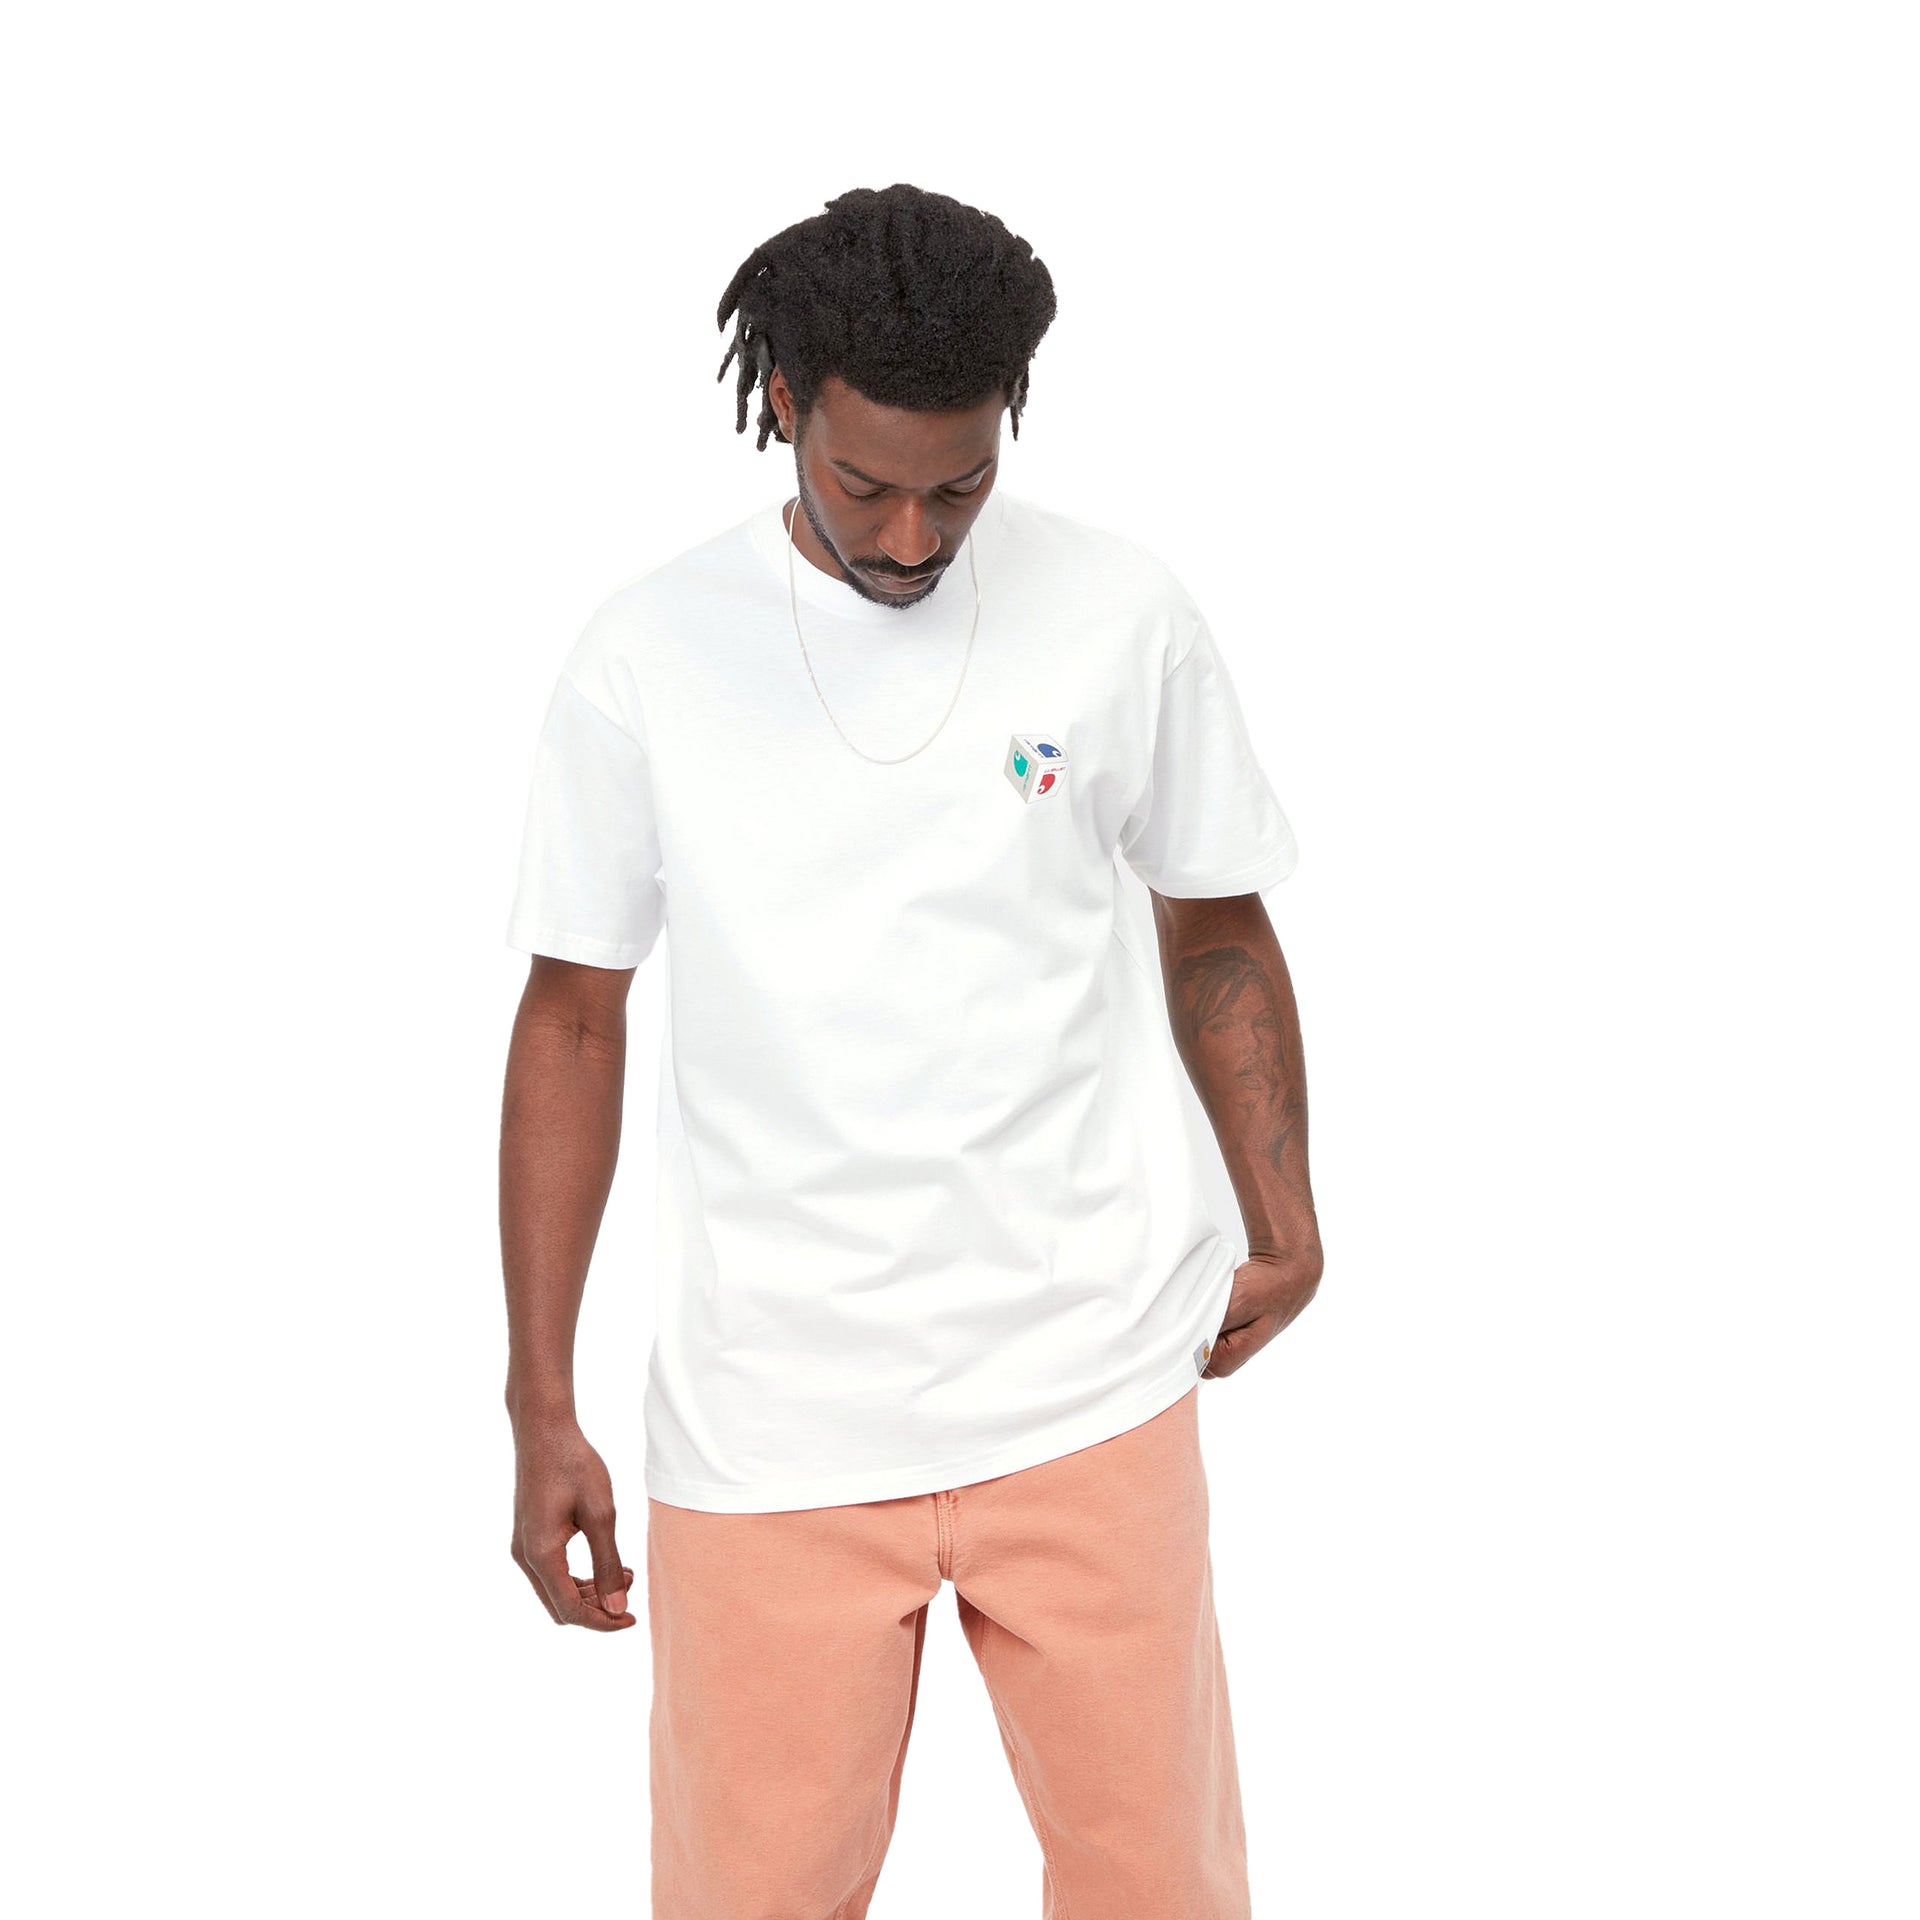 Carhartt Cube T-Shirt White